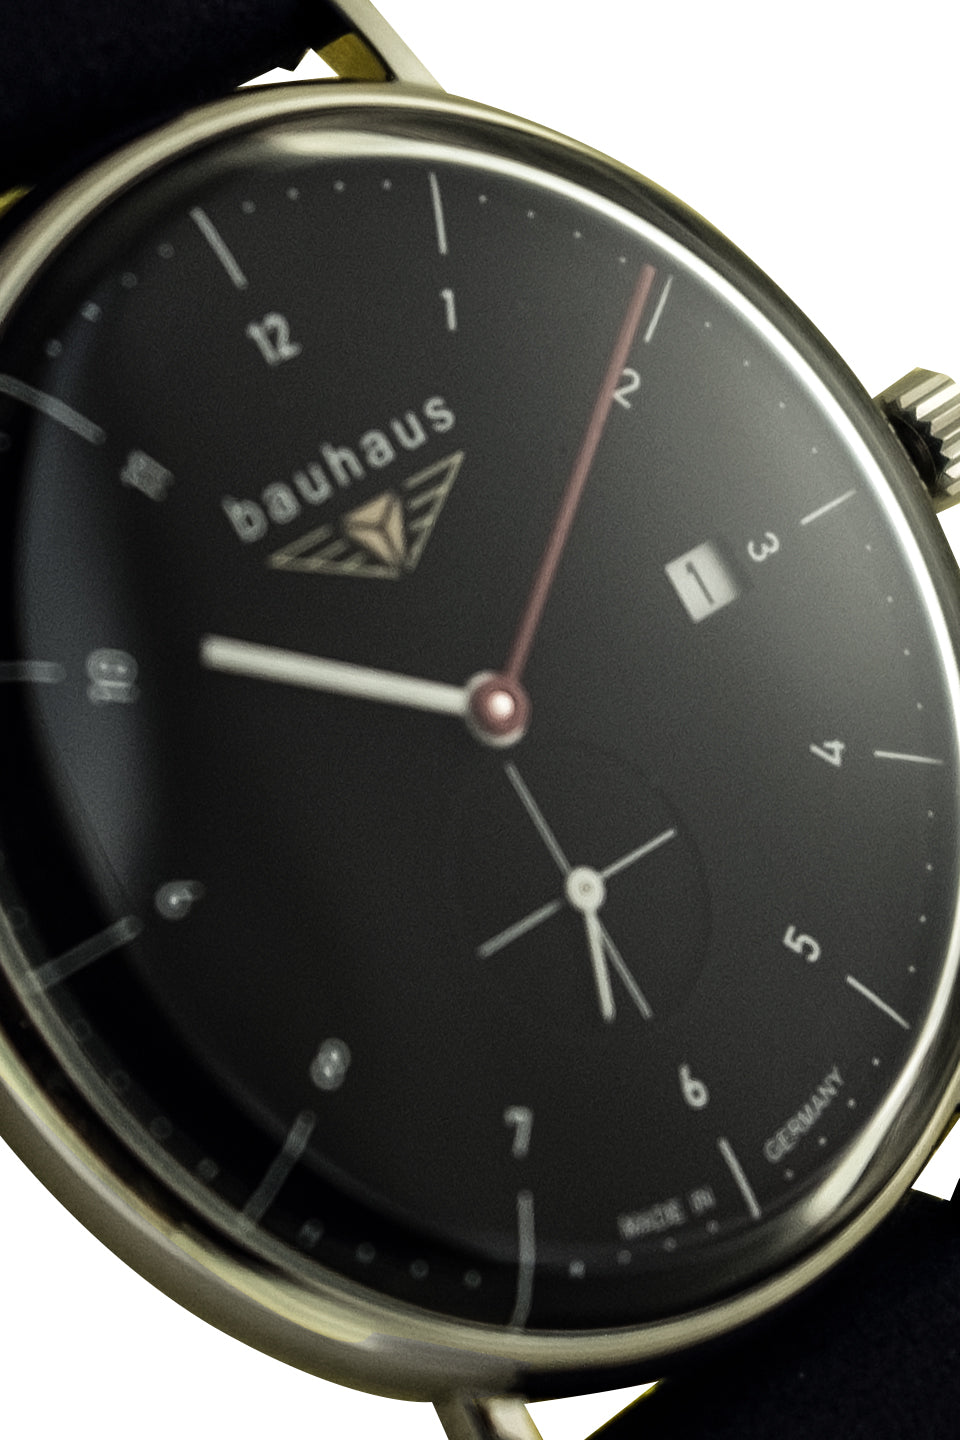 Bauhaus 2130-2 Swiss Movement with Date display